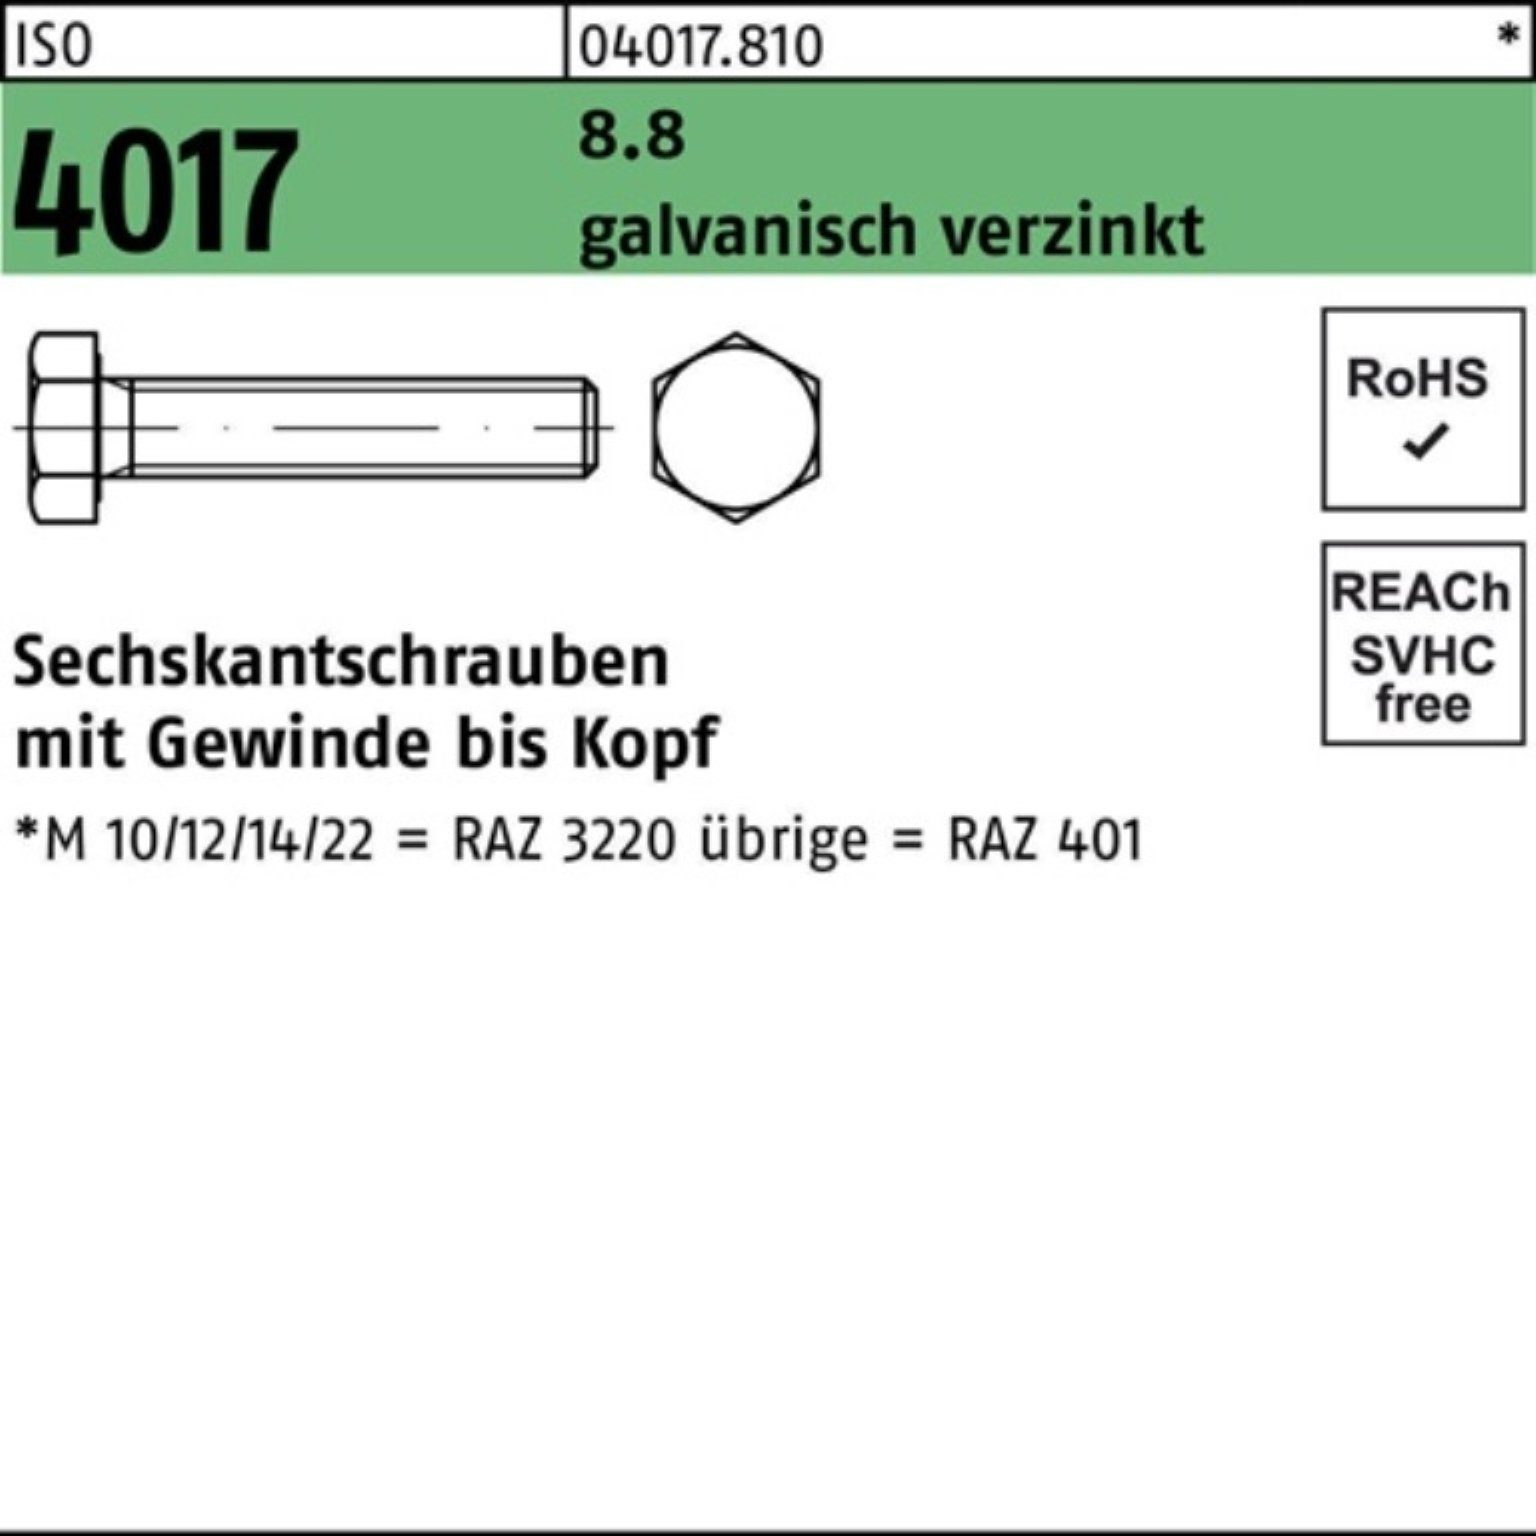 St 100 ISO Sechskantschraube Bufab M8x Pack 100er 4017 VG galv.verz. 8.8 Sechskantschraube 160